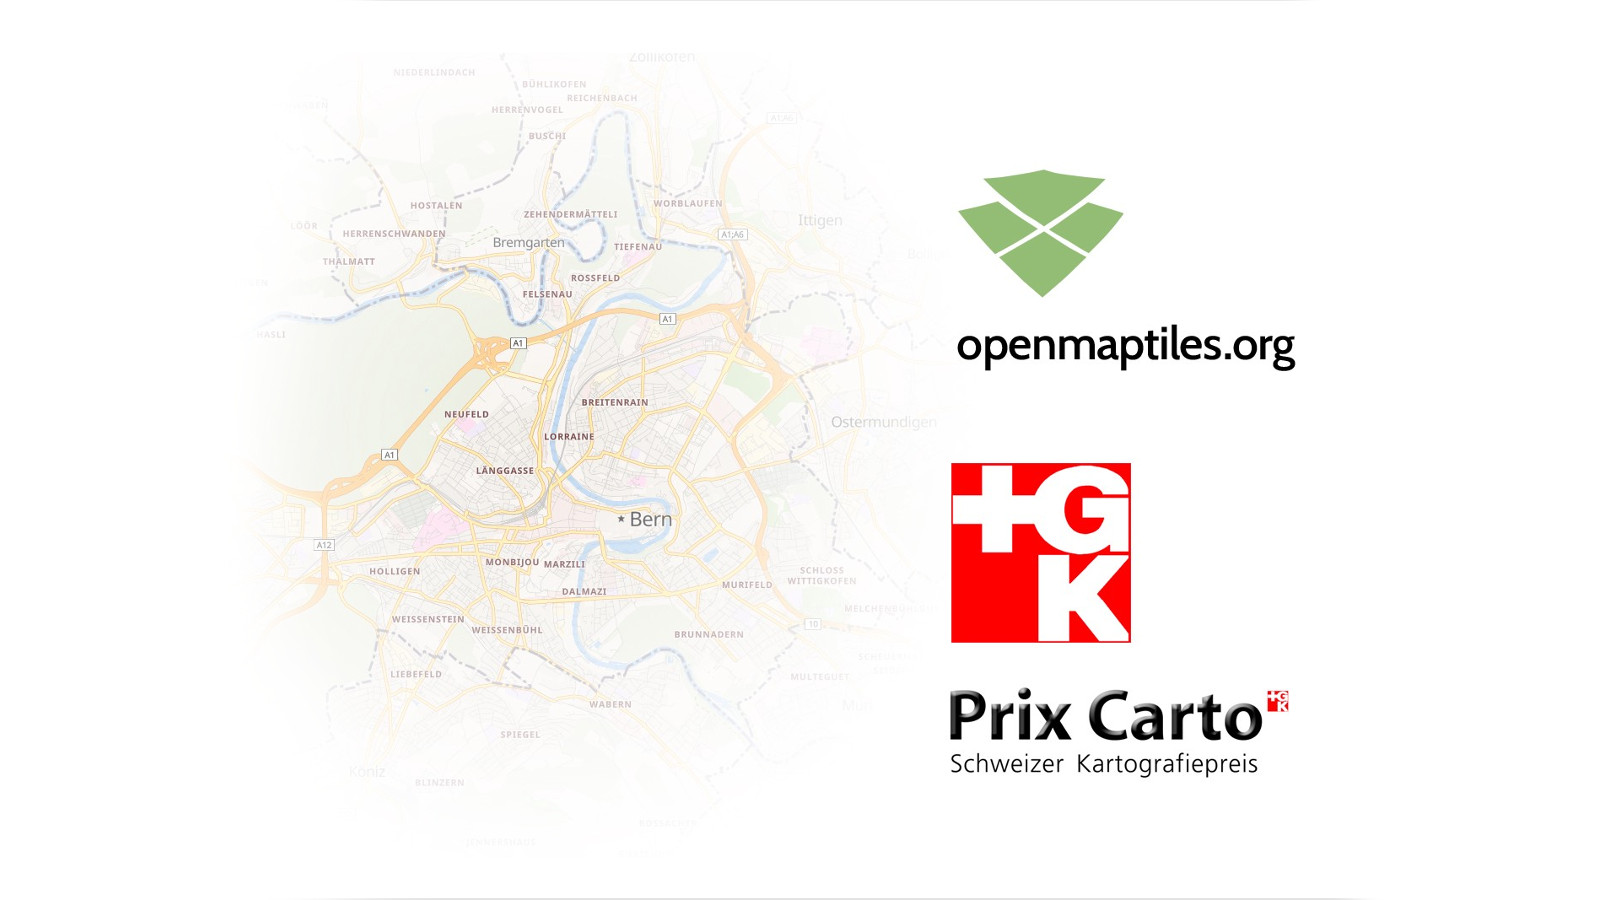 Swiss Society of Cartography and the Prix Carto award image